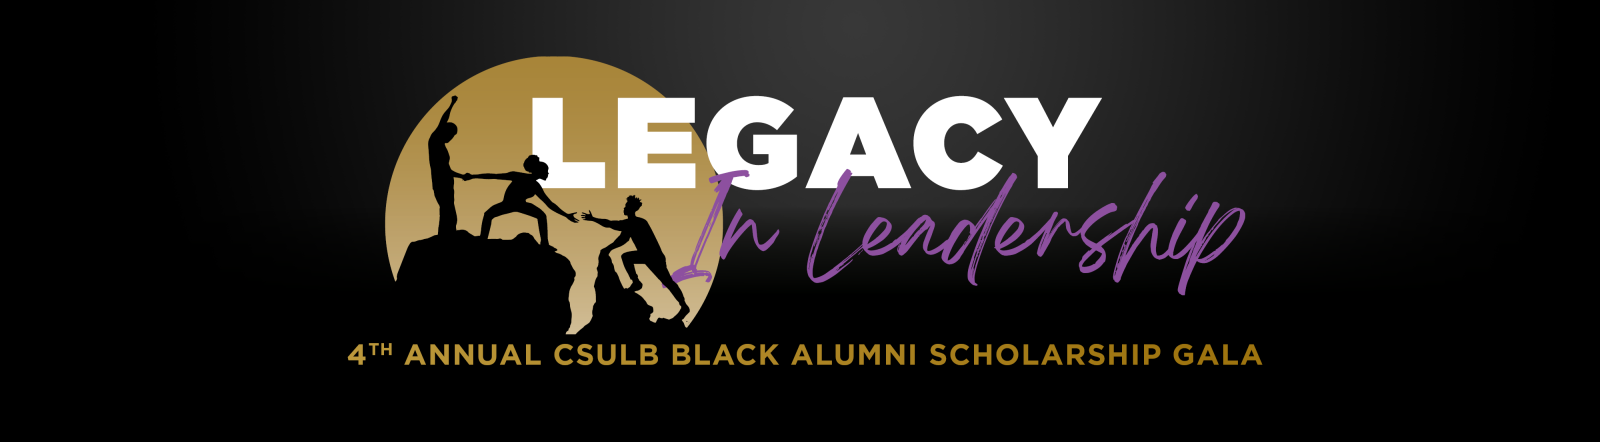 4th Annual CSULB Black Alumni Scholarship Gala